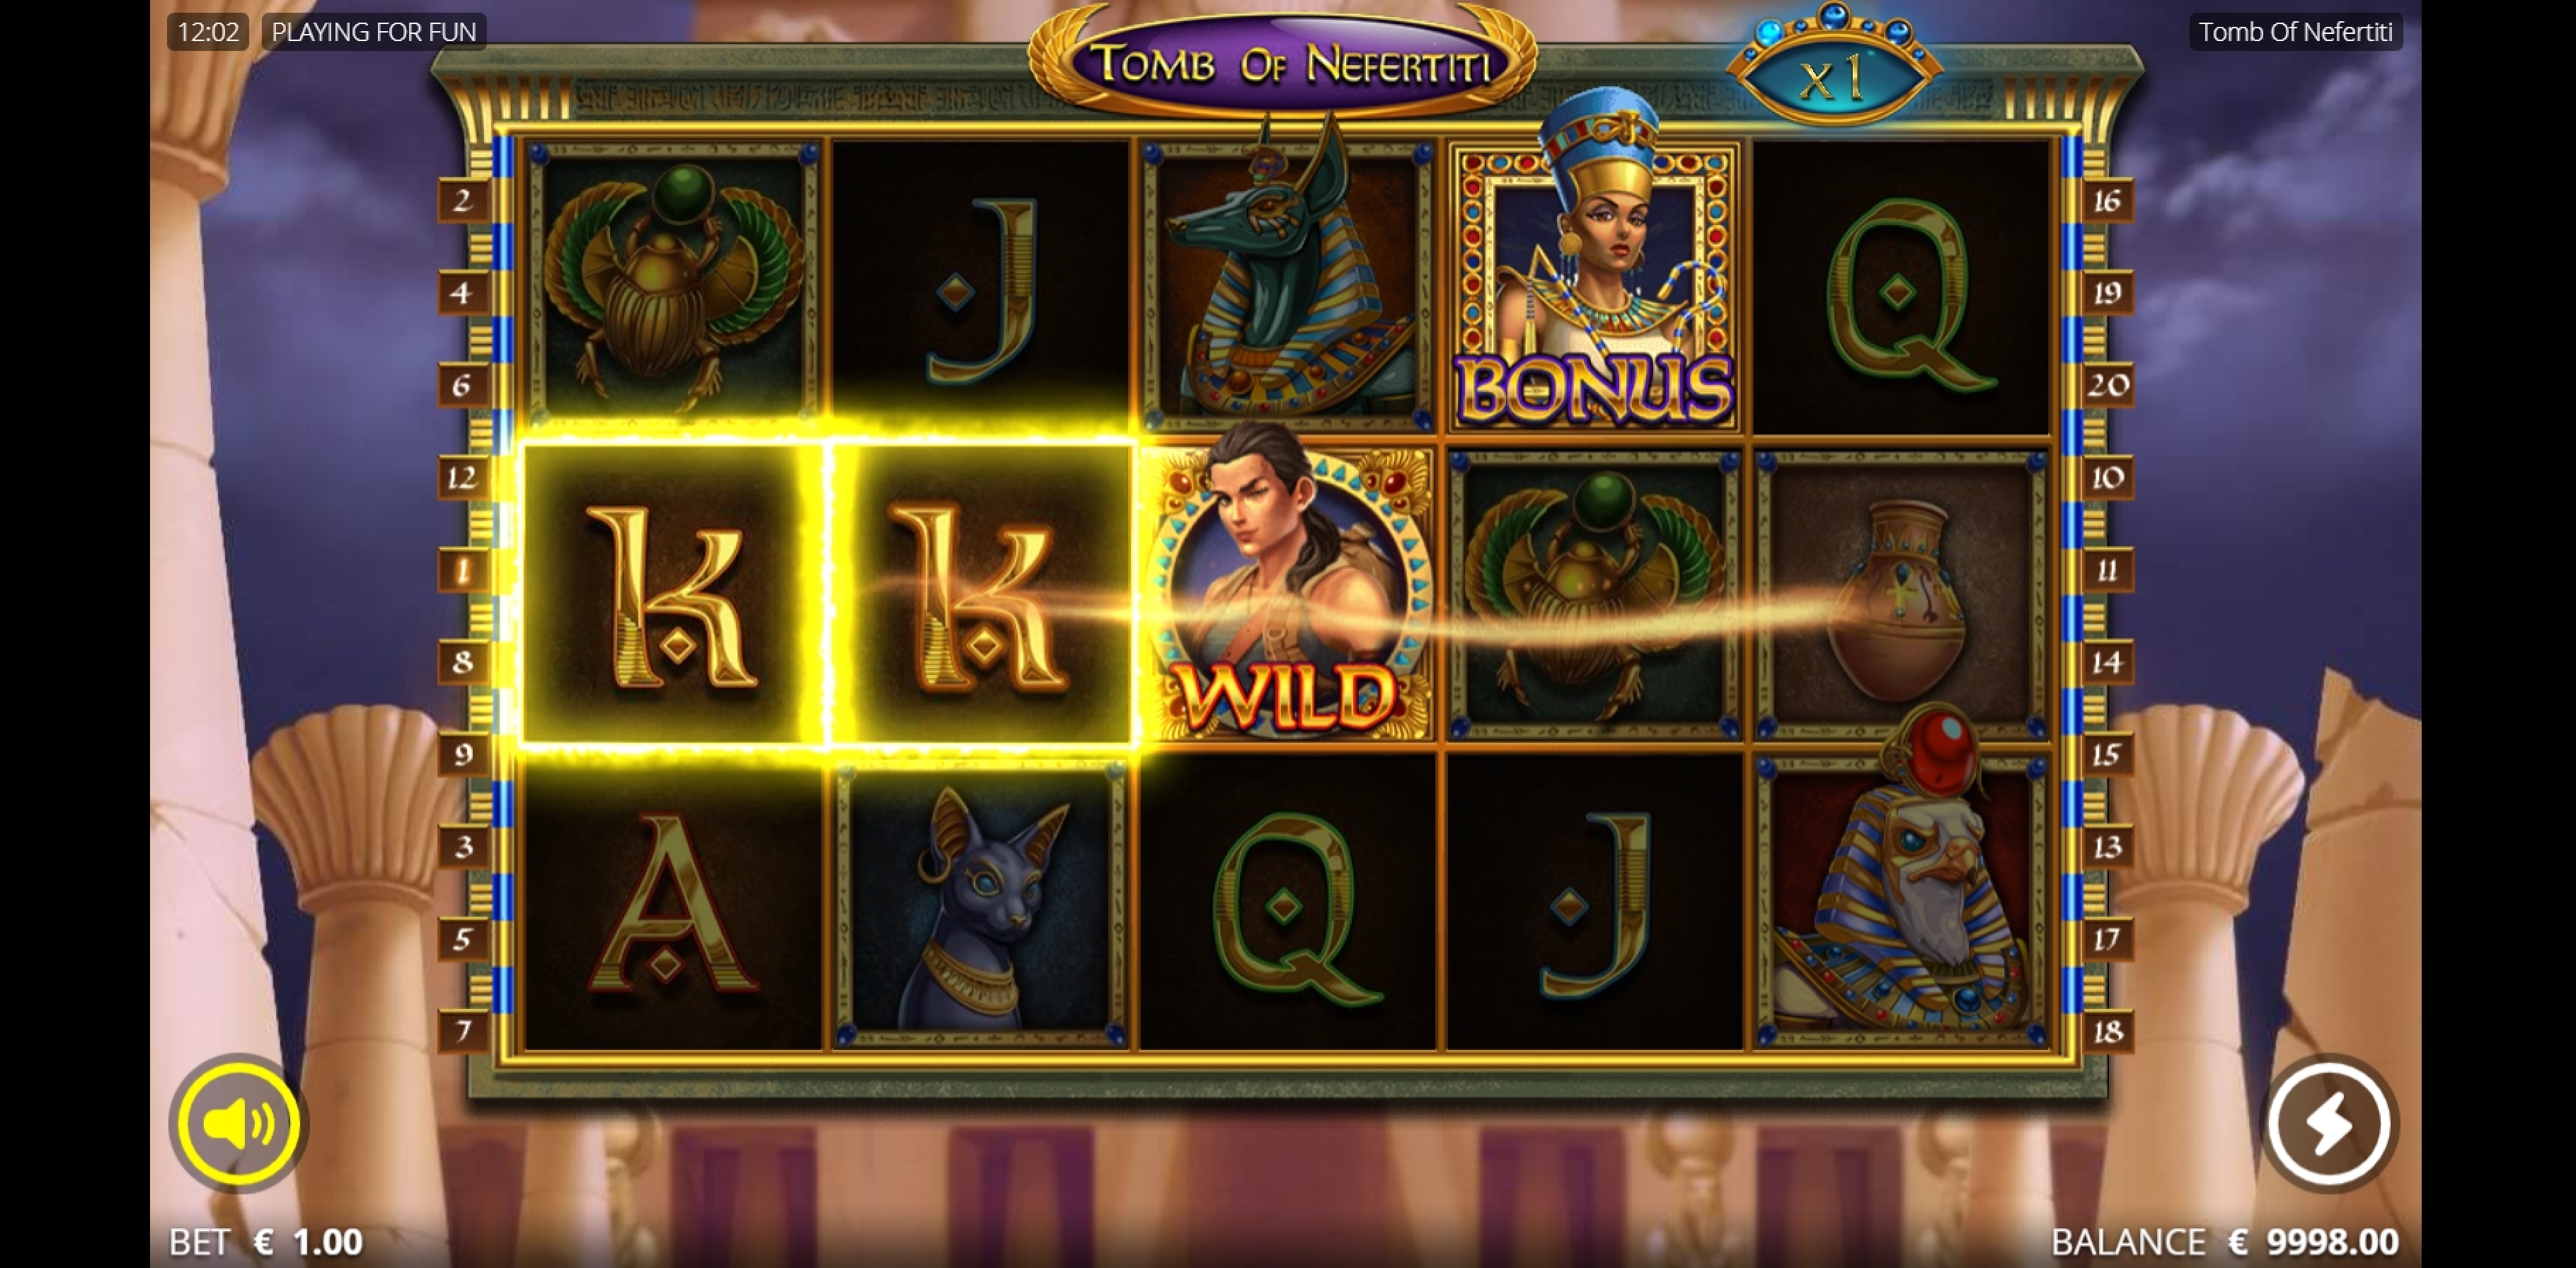 Win Money in Tomb Of Nefertiti Free Slot Game by Nolimit City